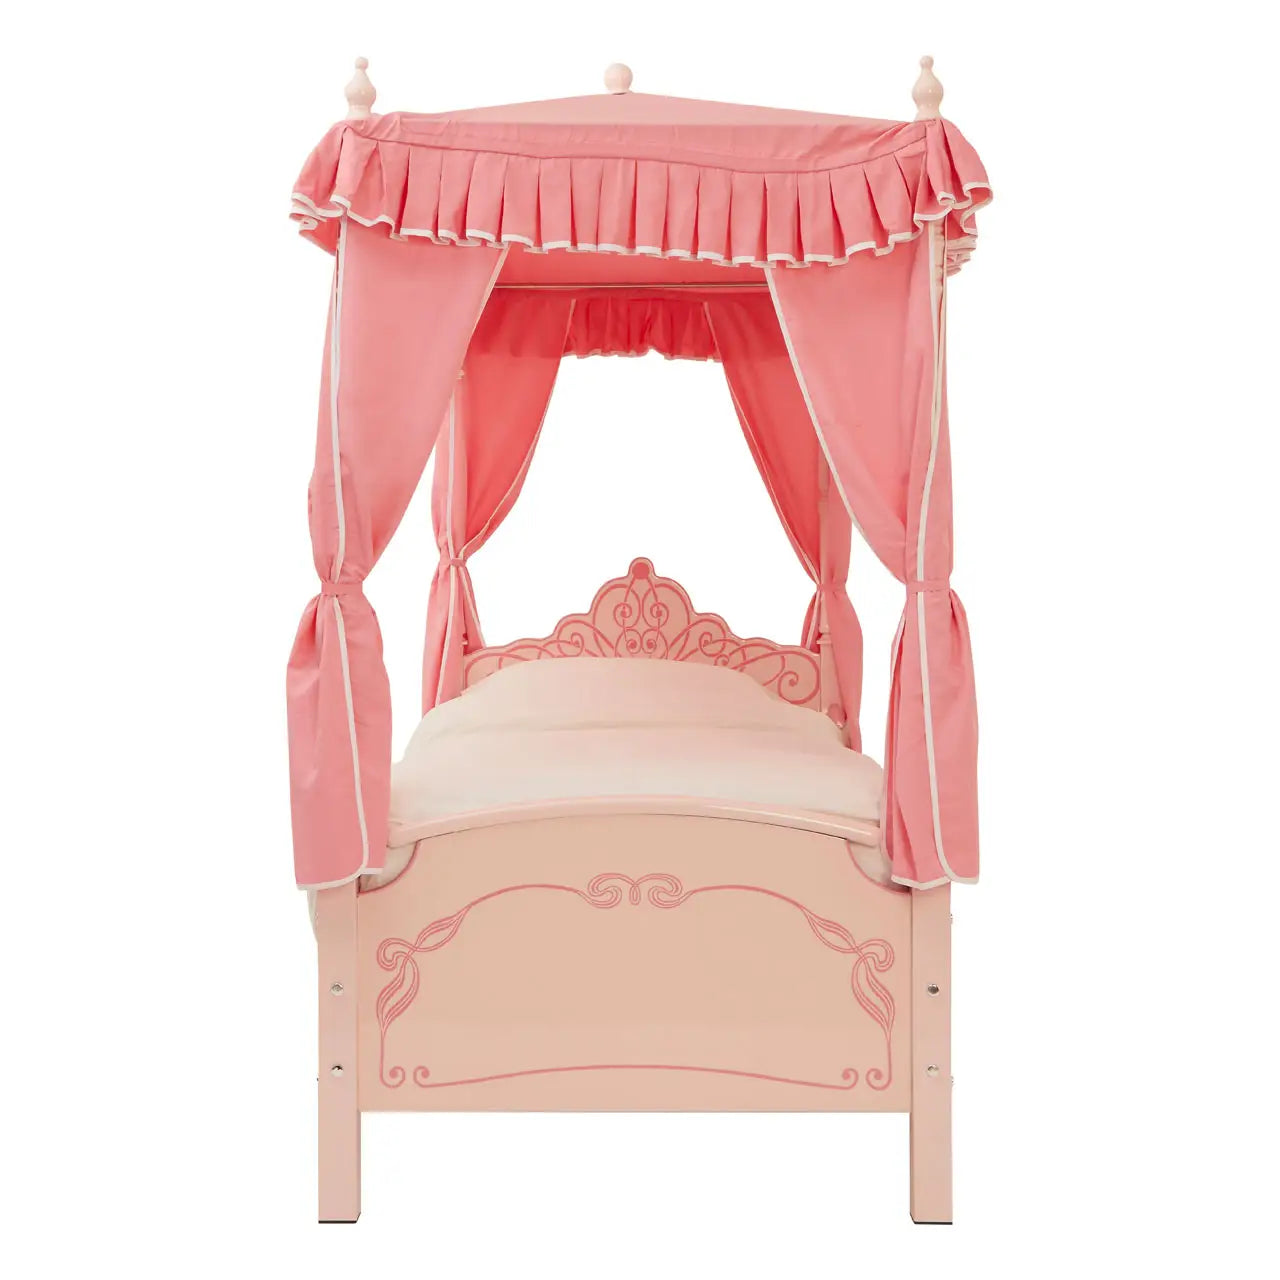 Princess Palace Bed